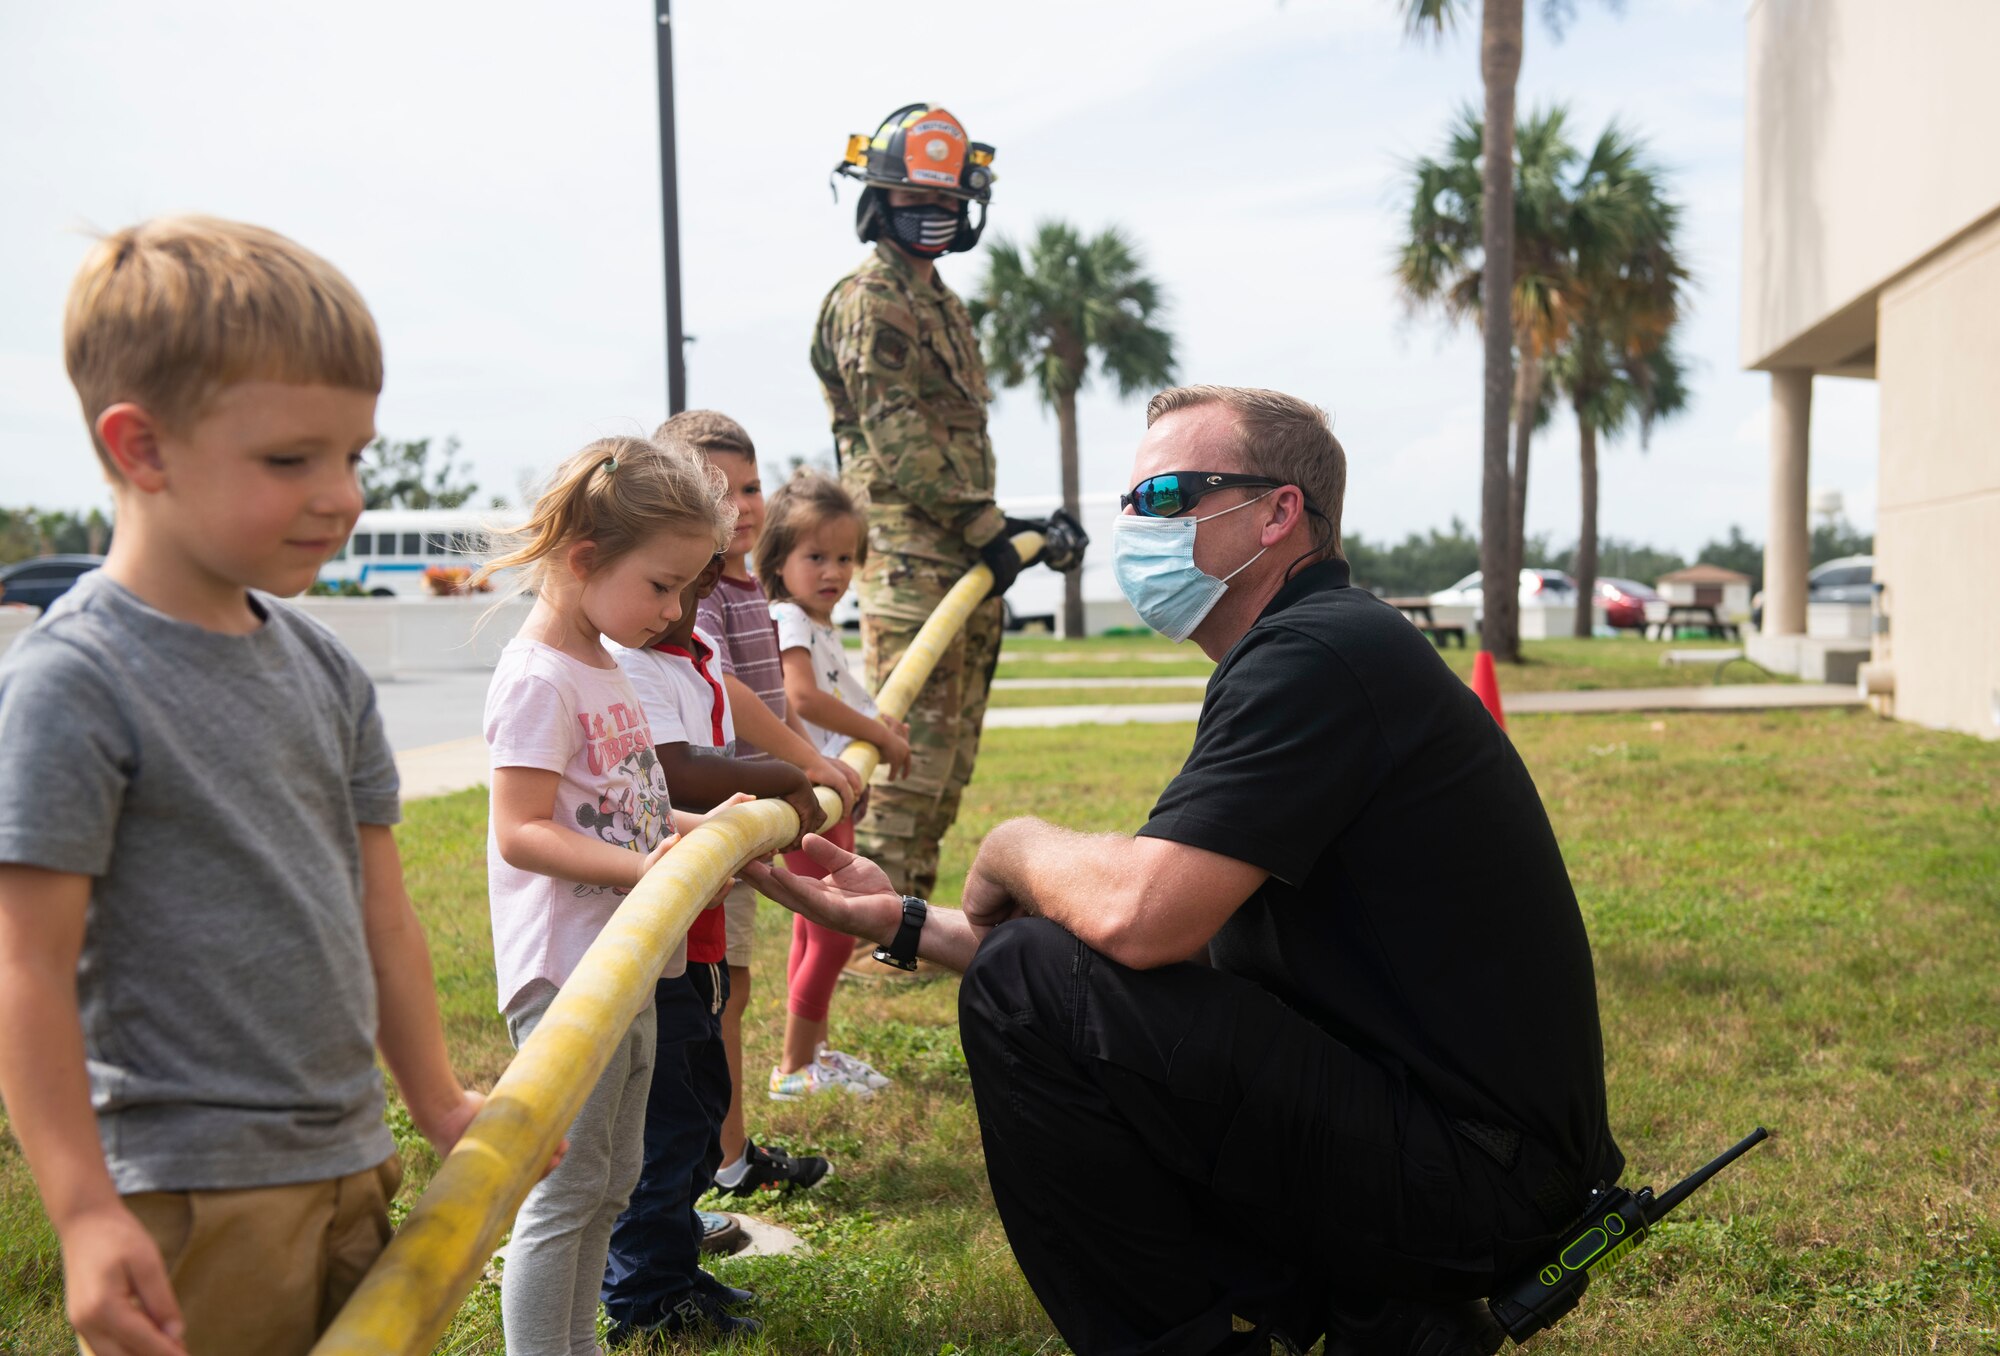 man shows fire hose to children